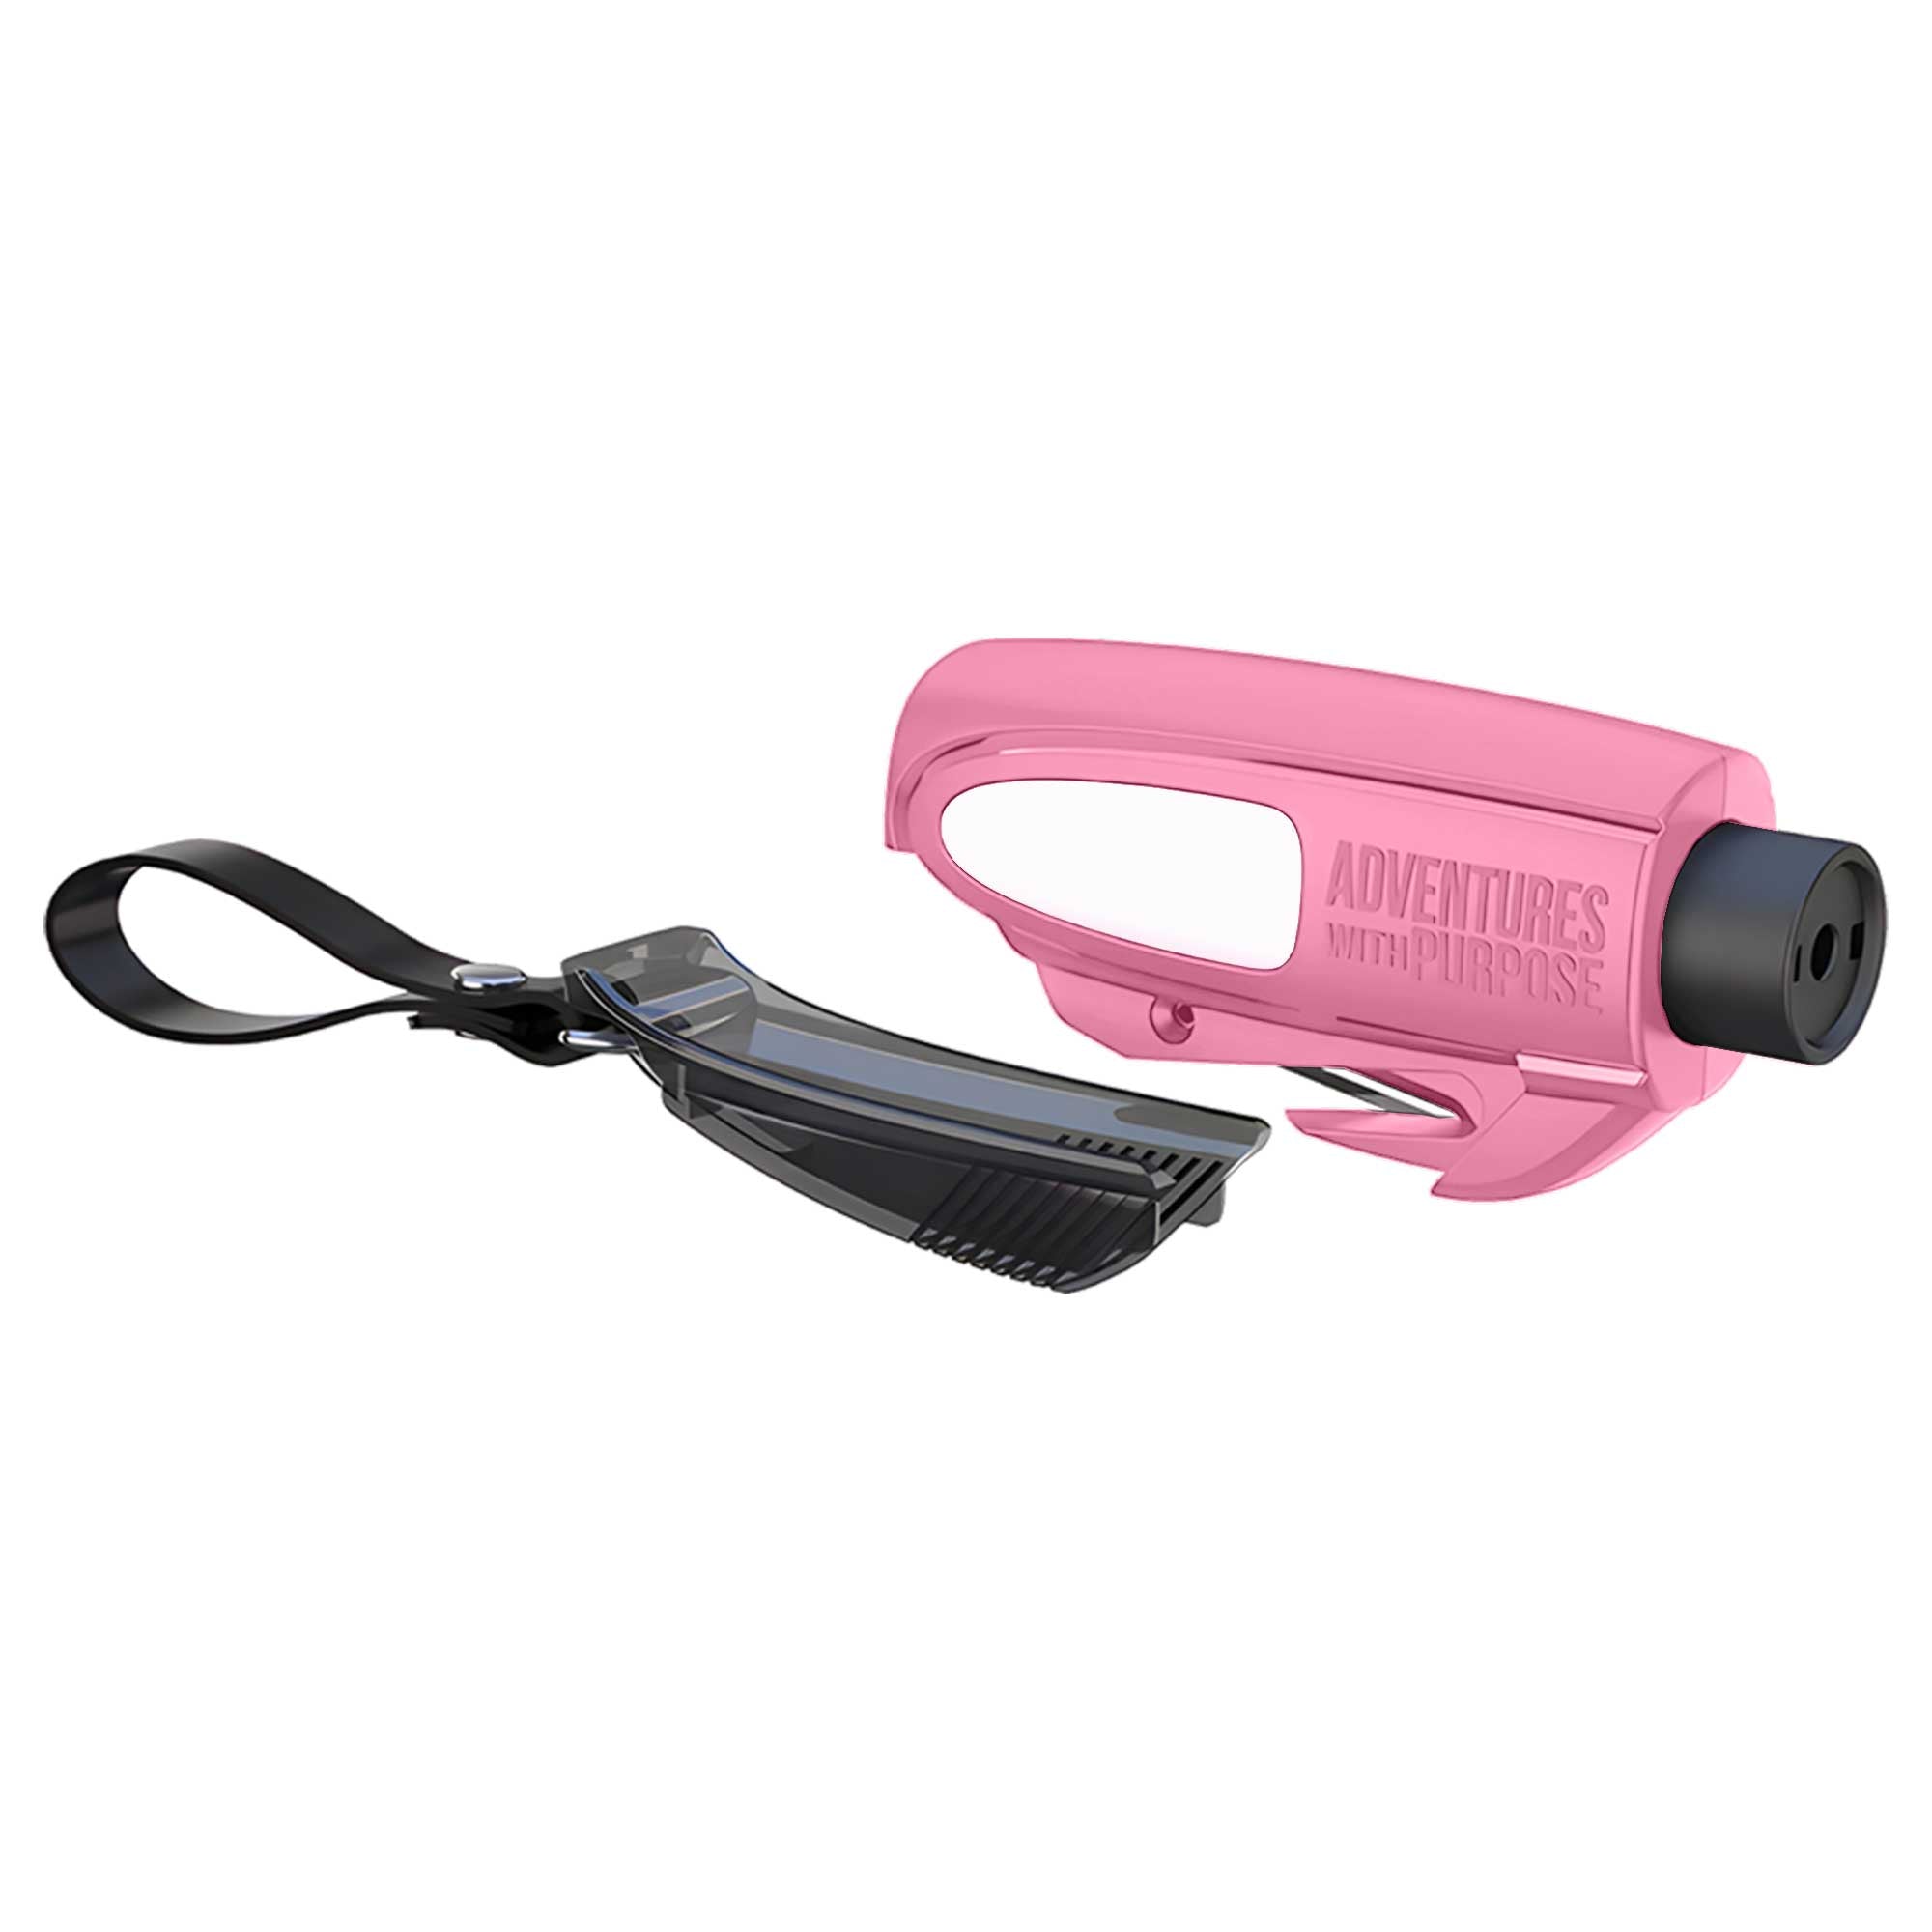 resqme® Car Escape Tool, Seatbelt Cutter / Window Breaker - Pink